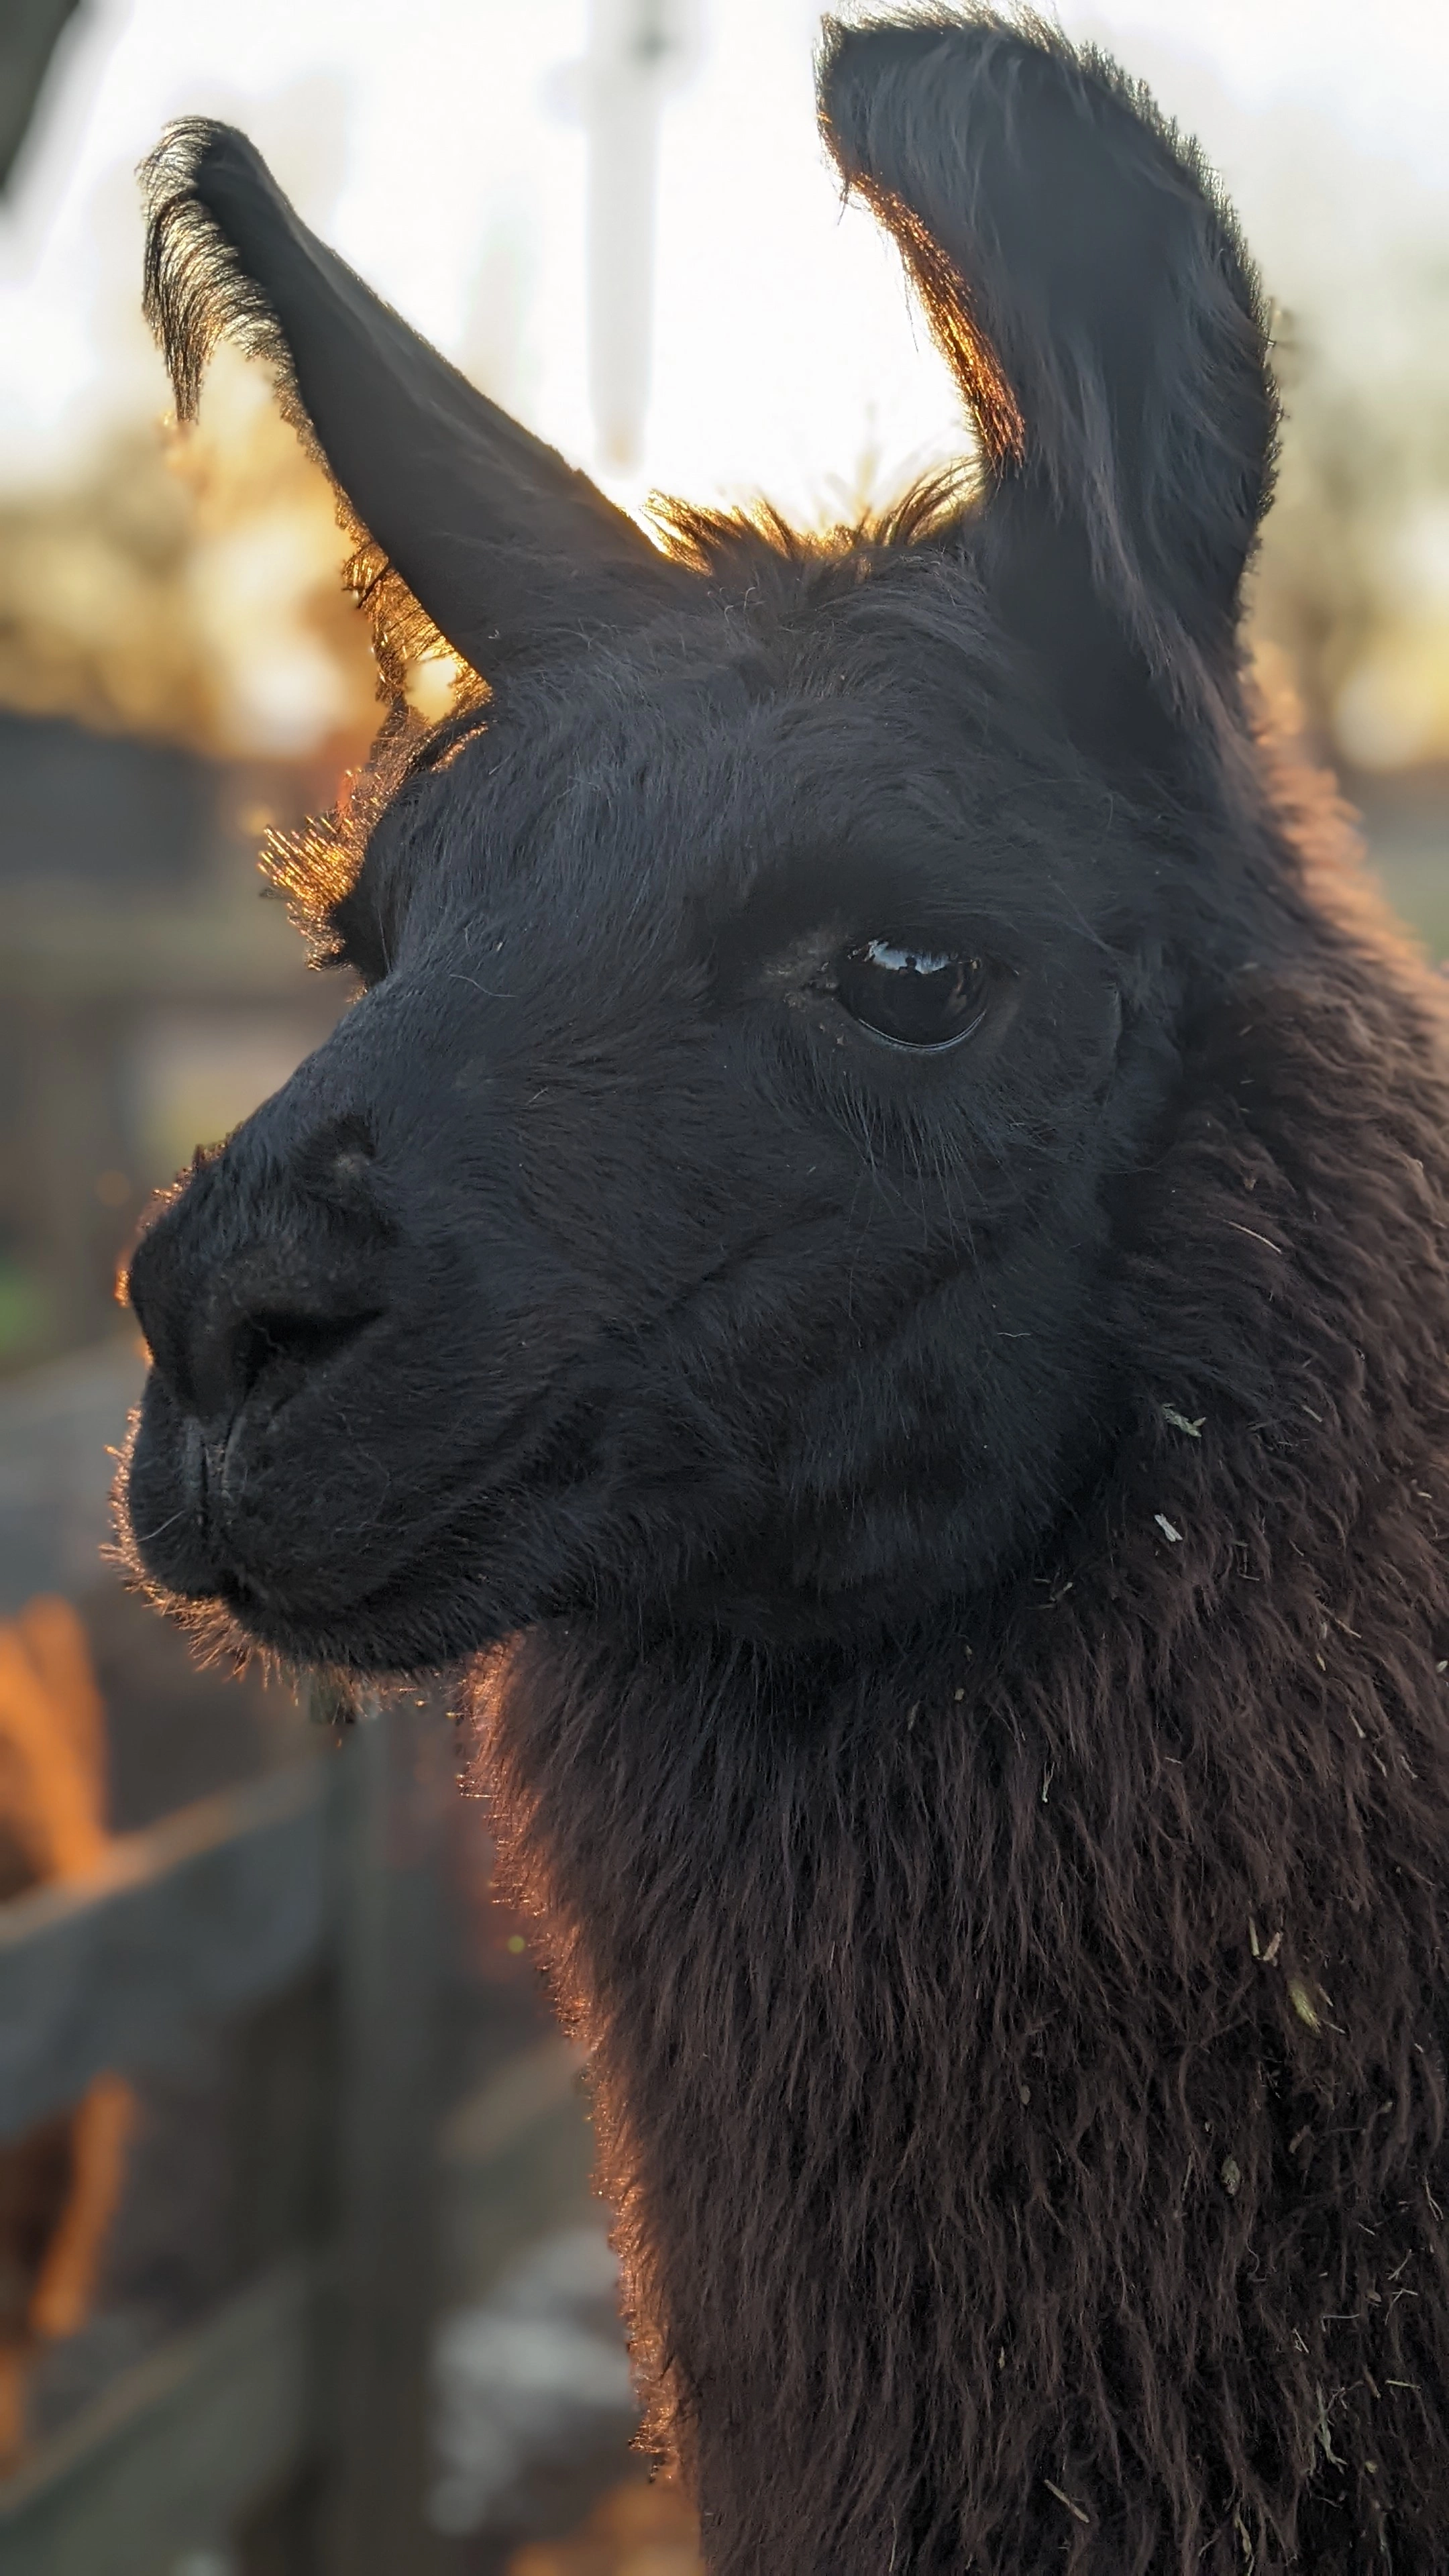 A portrait image of a llama named Tonks aged nine months